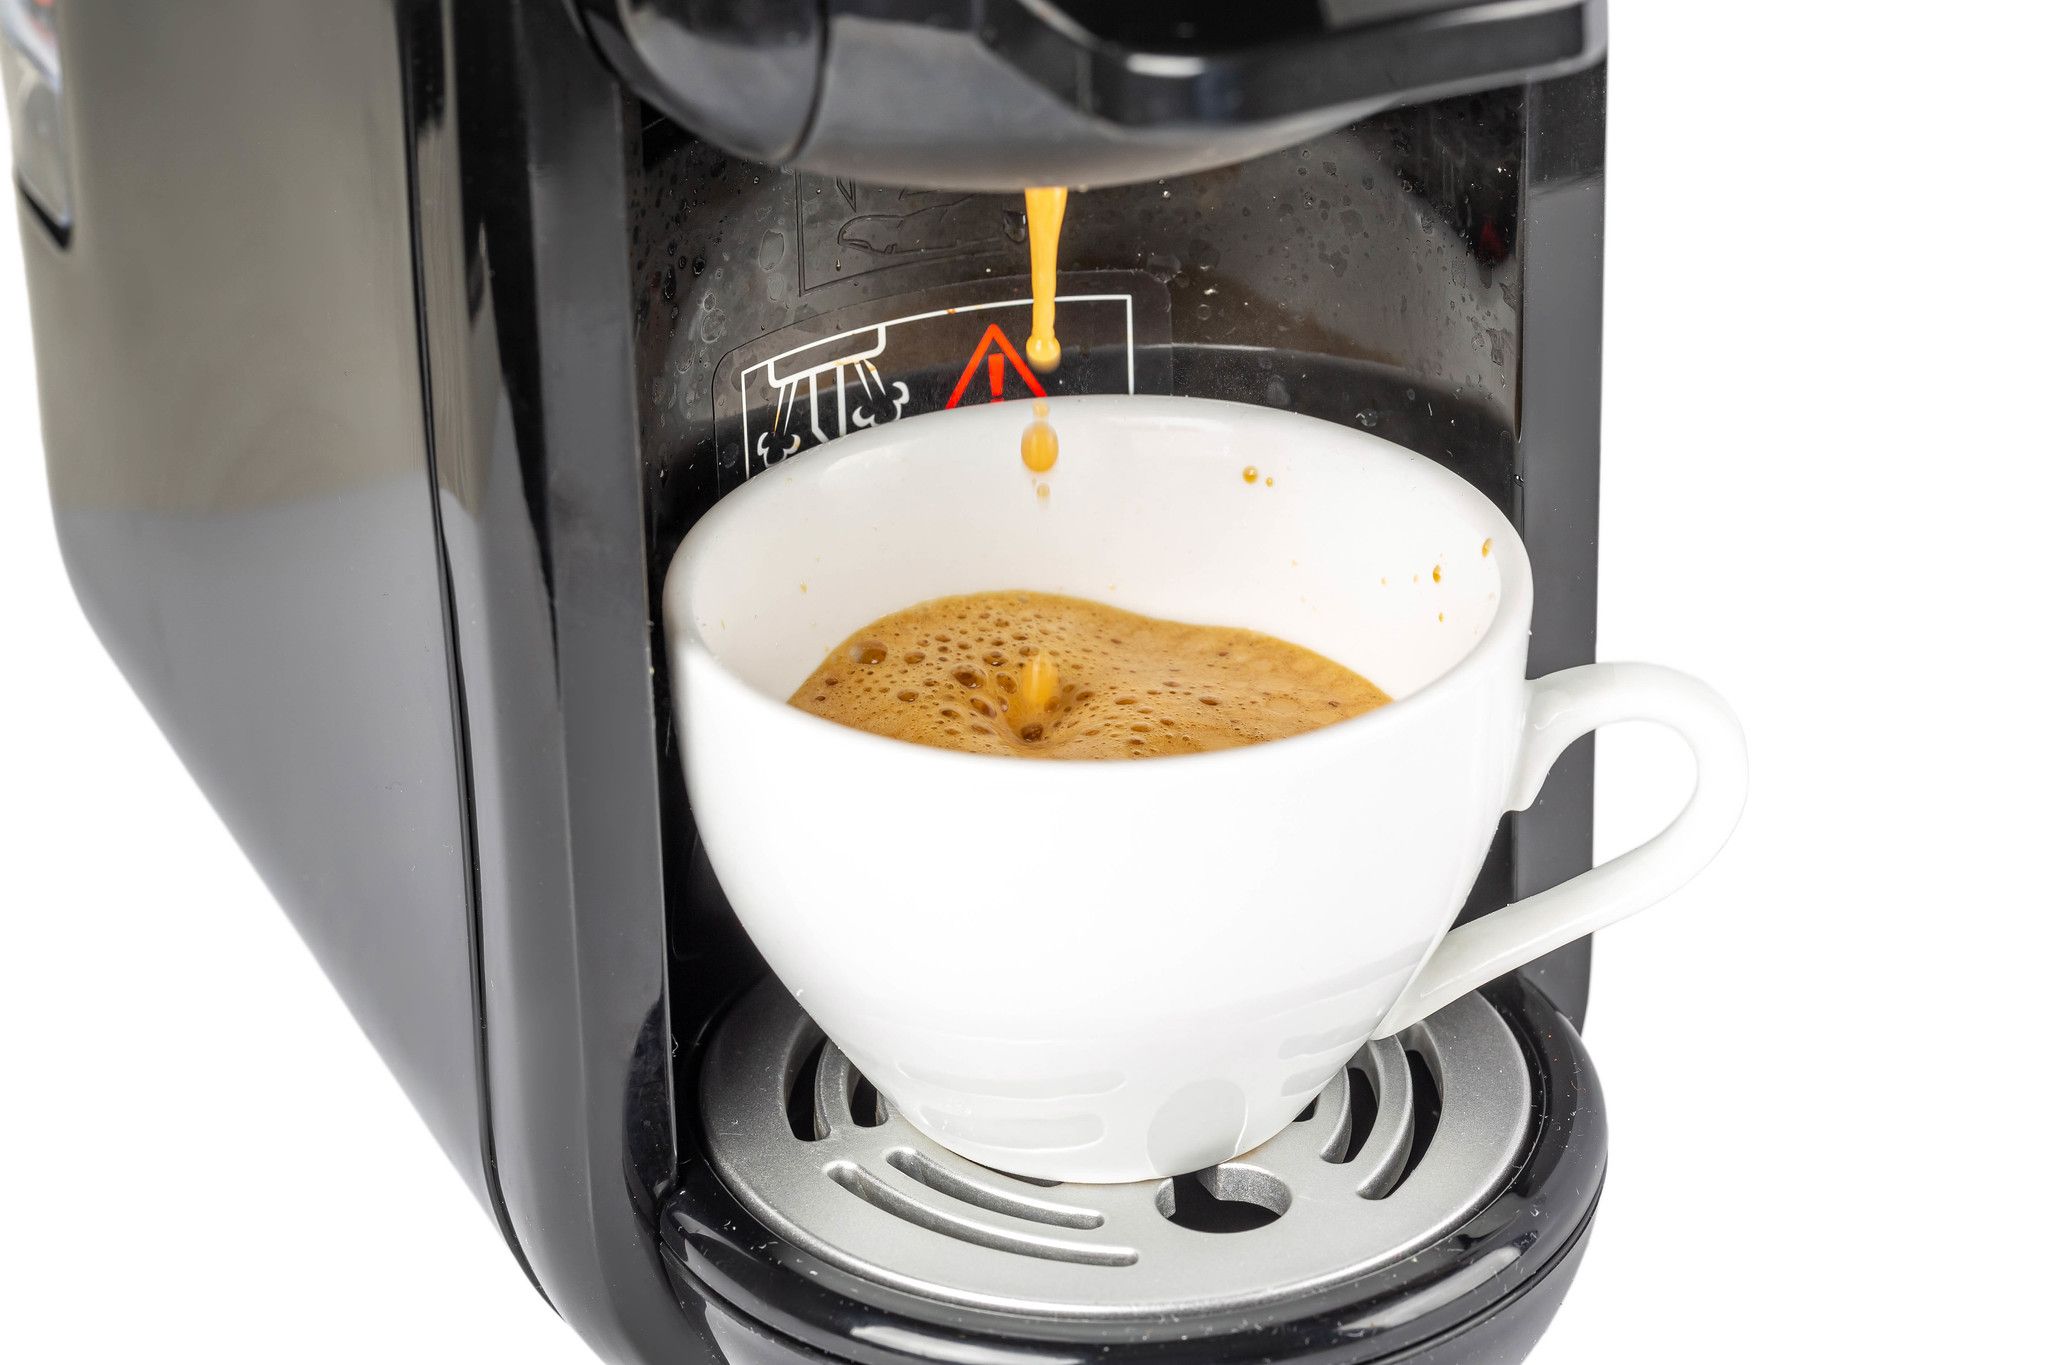 American Airlines espresso machine coffee